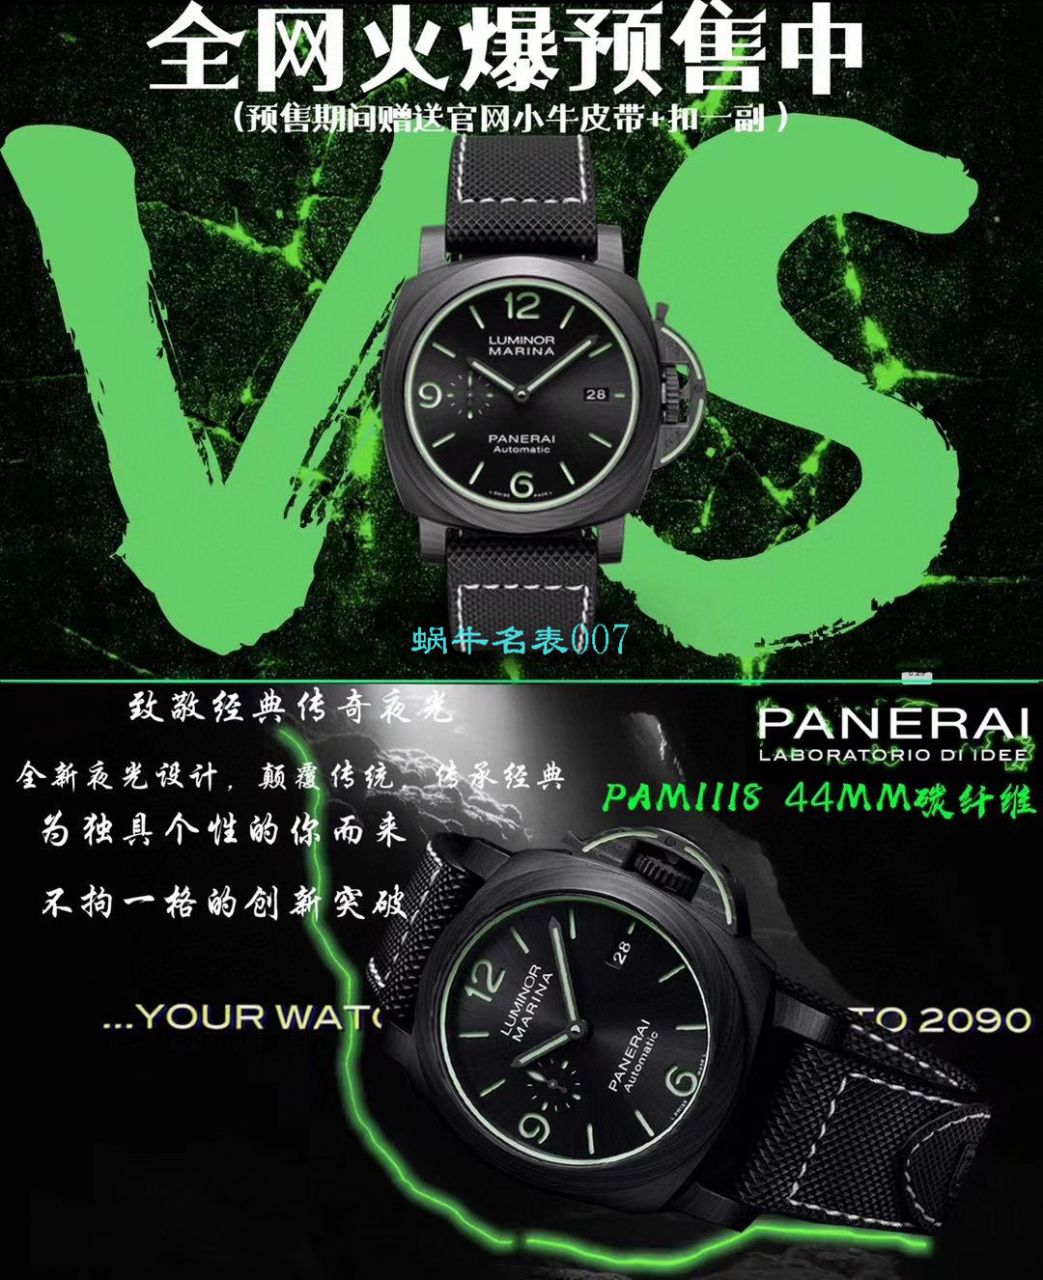 VS厂2020新品沛纳海LUMINOR系列PAM01118腕表 / PAM1118